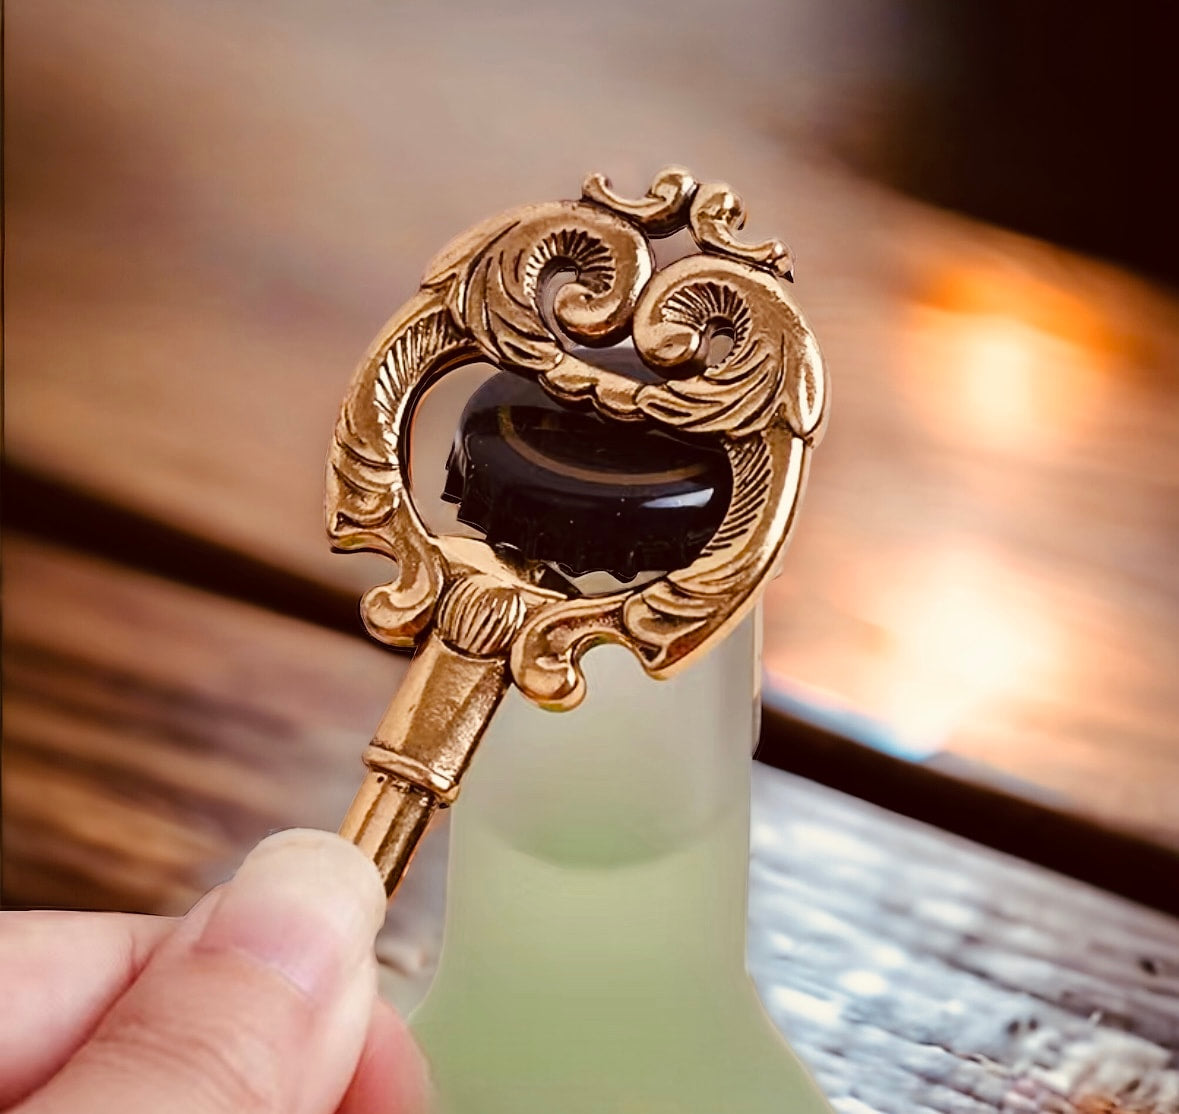 Vintage Inspired Key Shaped Bottle Opener